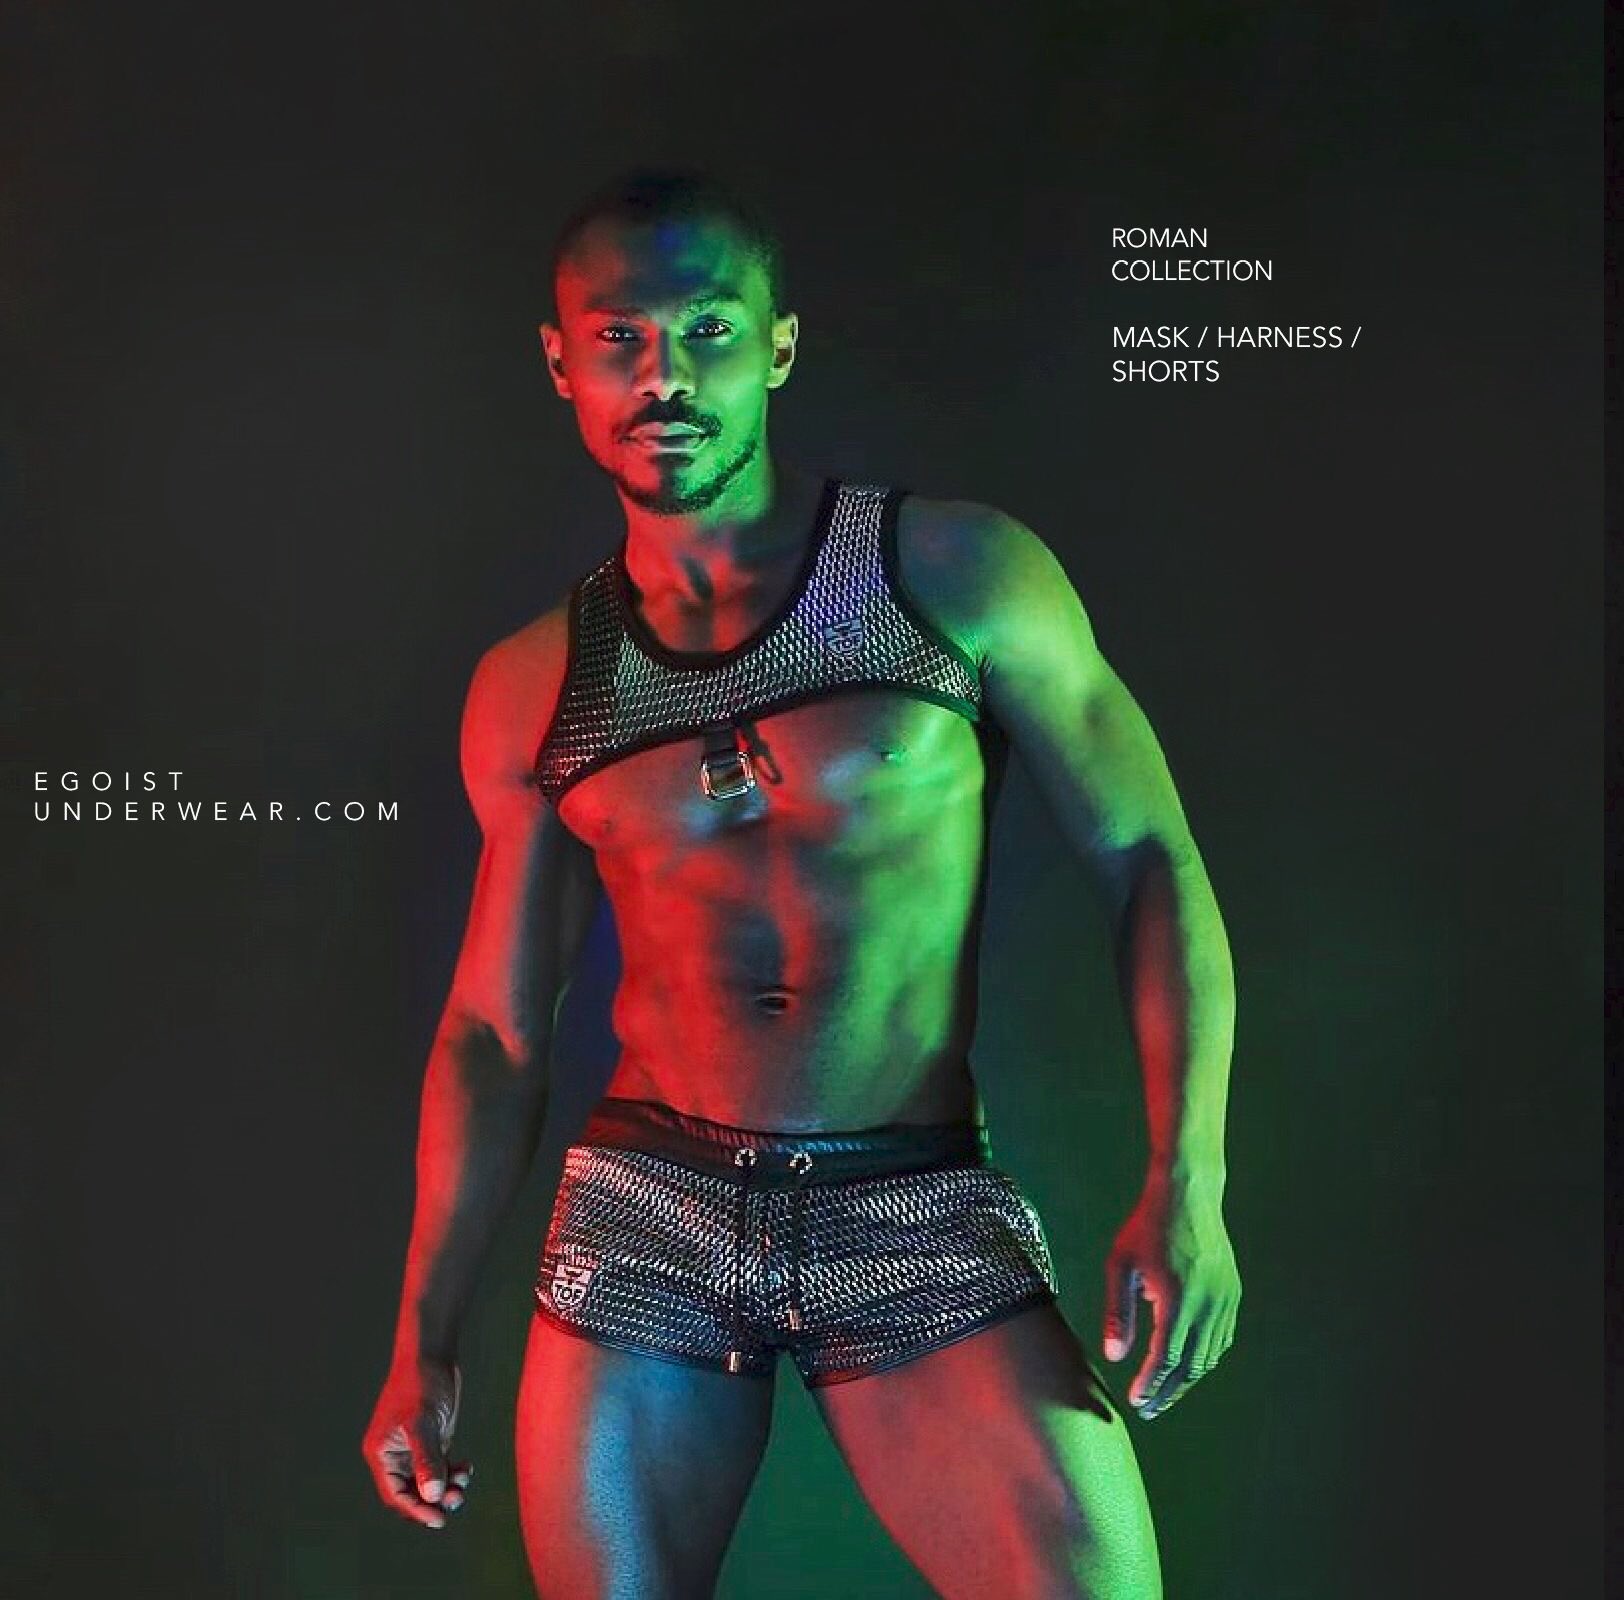 Egoist Underwear on X:  They are sexy, lightweight,  and elegant. #partyfashion #circuitparty #gay #shorts #partyshorts  #gaychicago #dance #menslook #gayla #muscles #menswear #gymwear #gaymiami  #mesh #gogodancer #mensjoggers